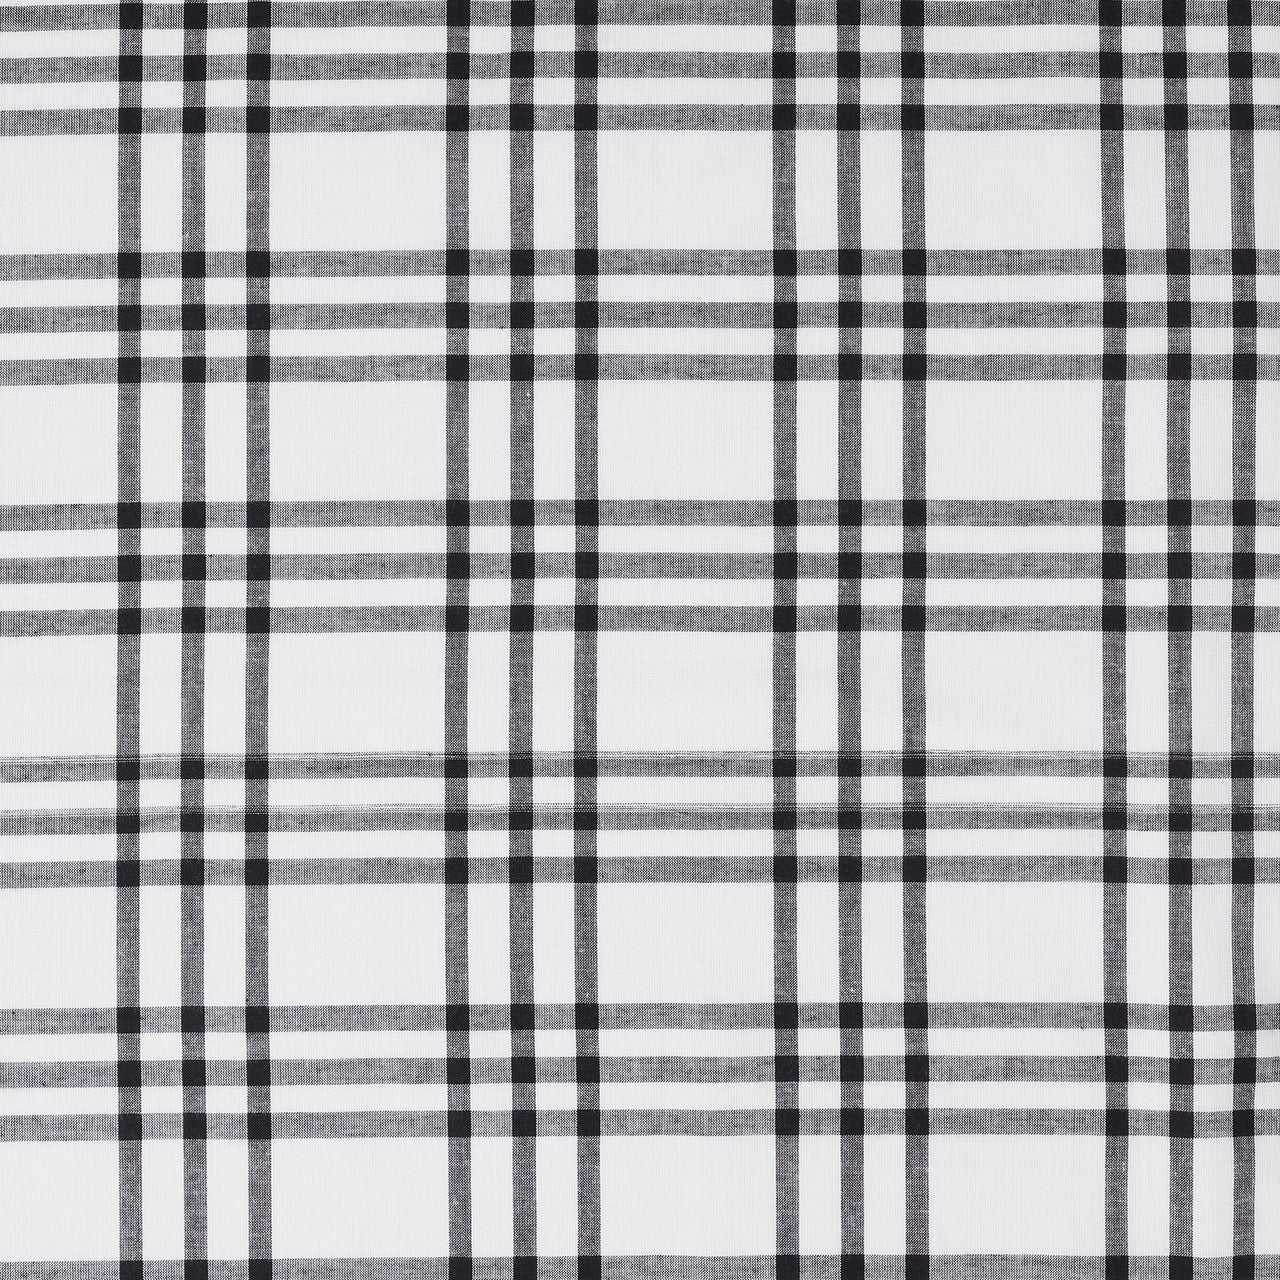 Sawyer Mill Black Plaid Short Panel Curtain Set of 2 63x36 VHC Brands